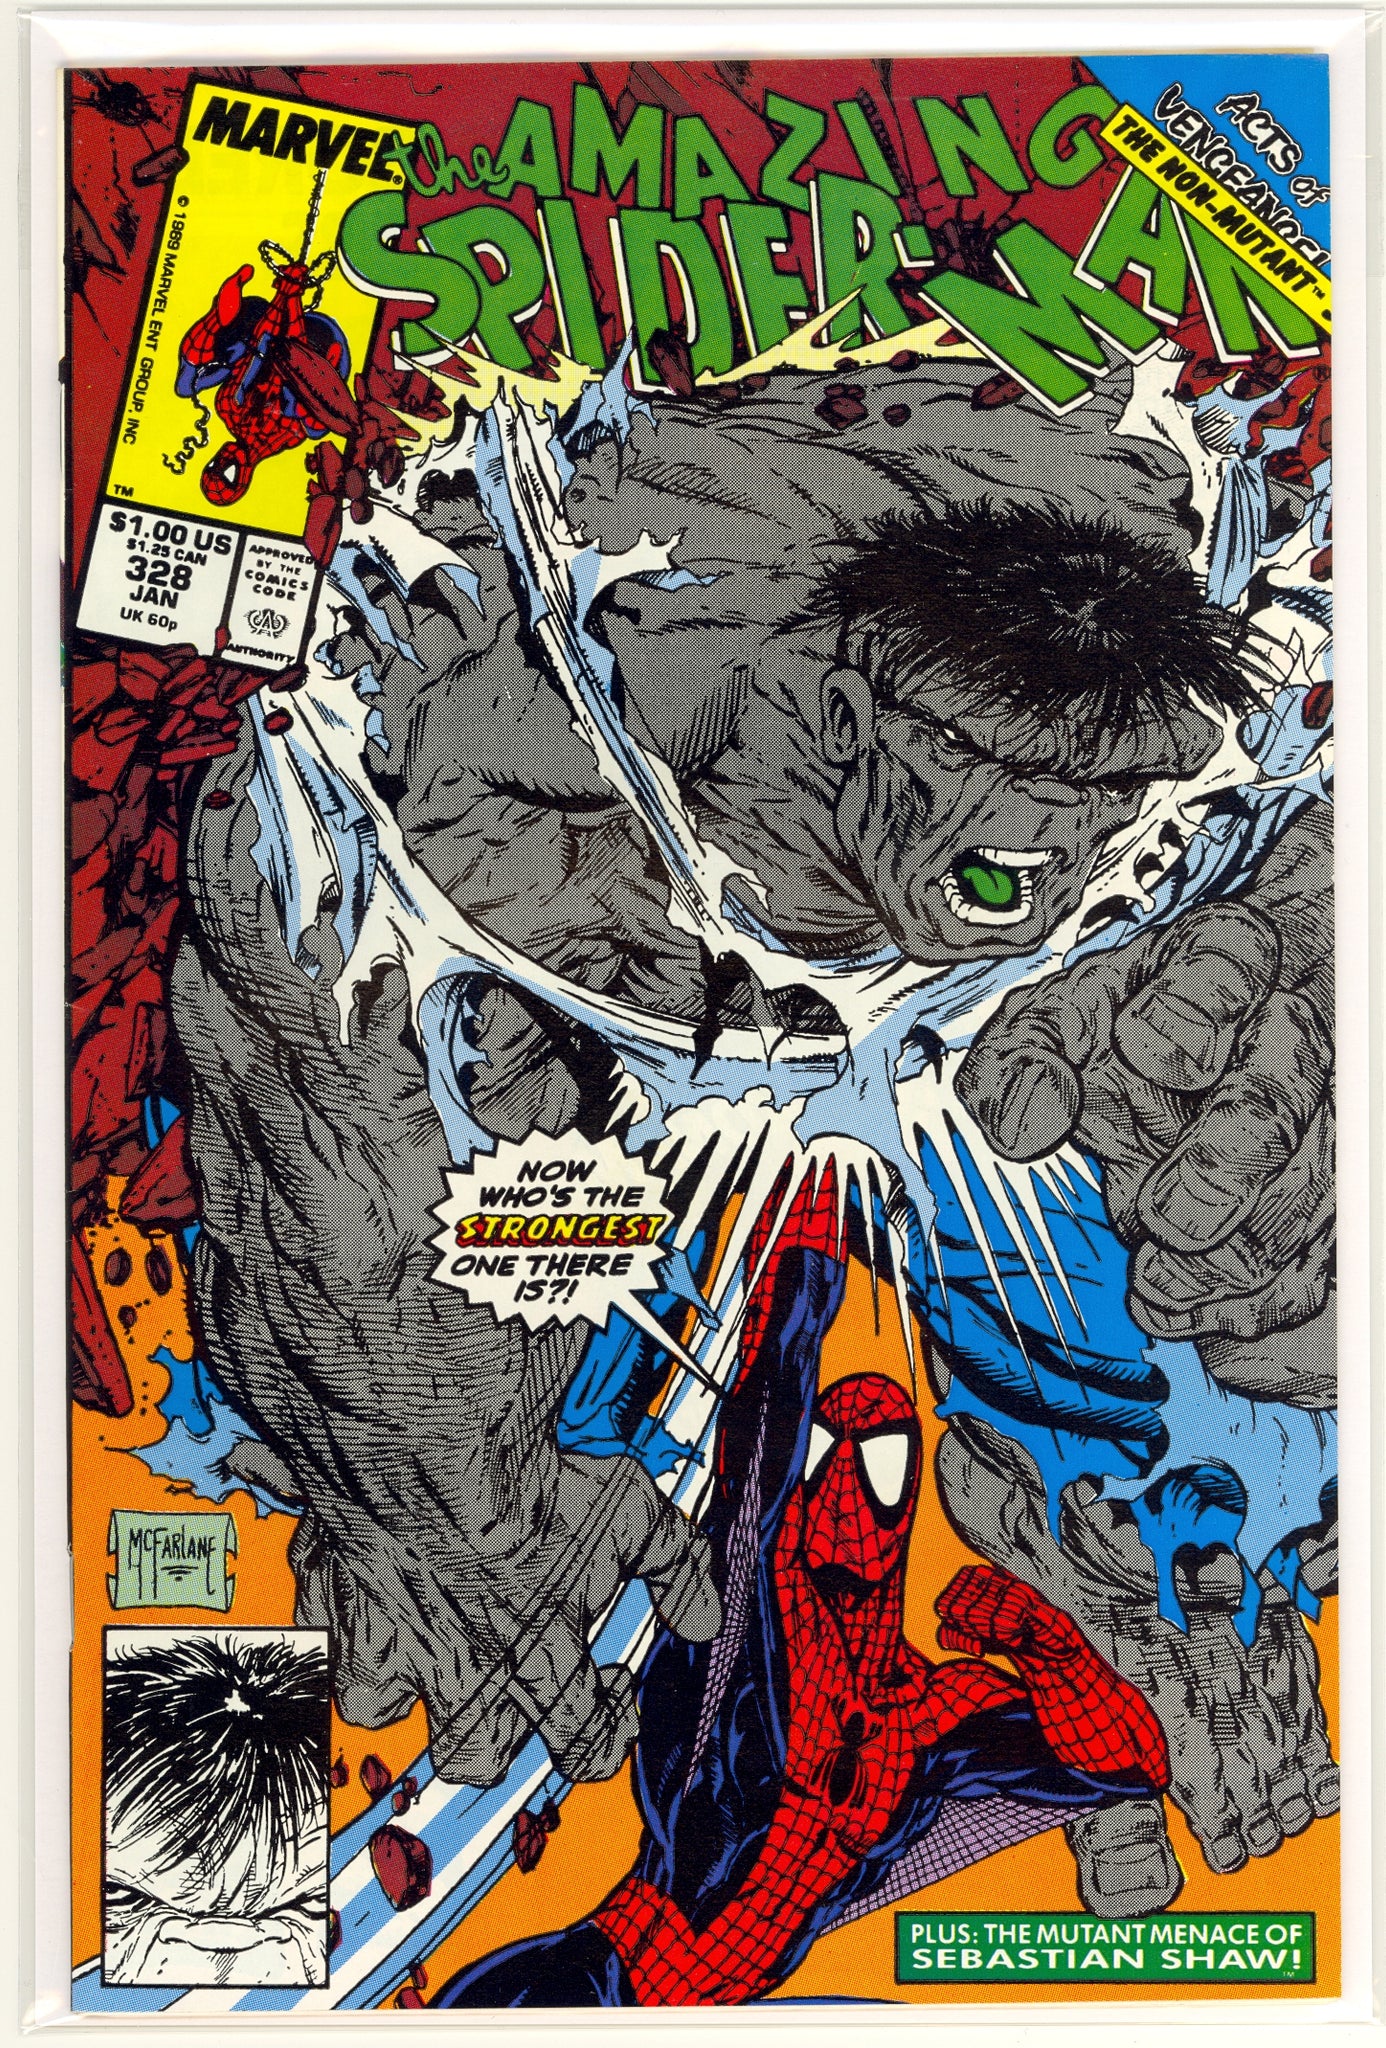 Amazing Spider-Man #328 (1990) McFarlane, Grey Hulk